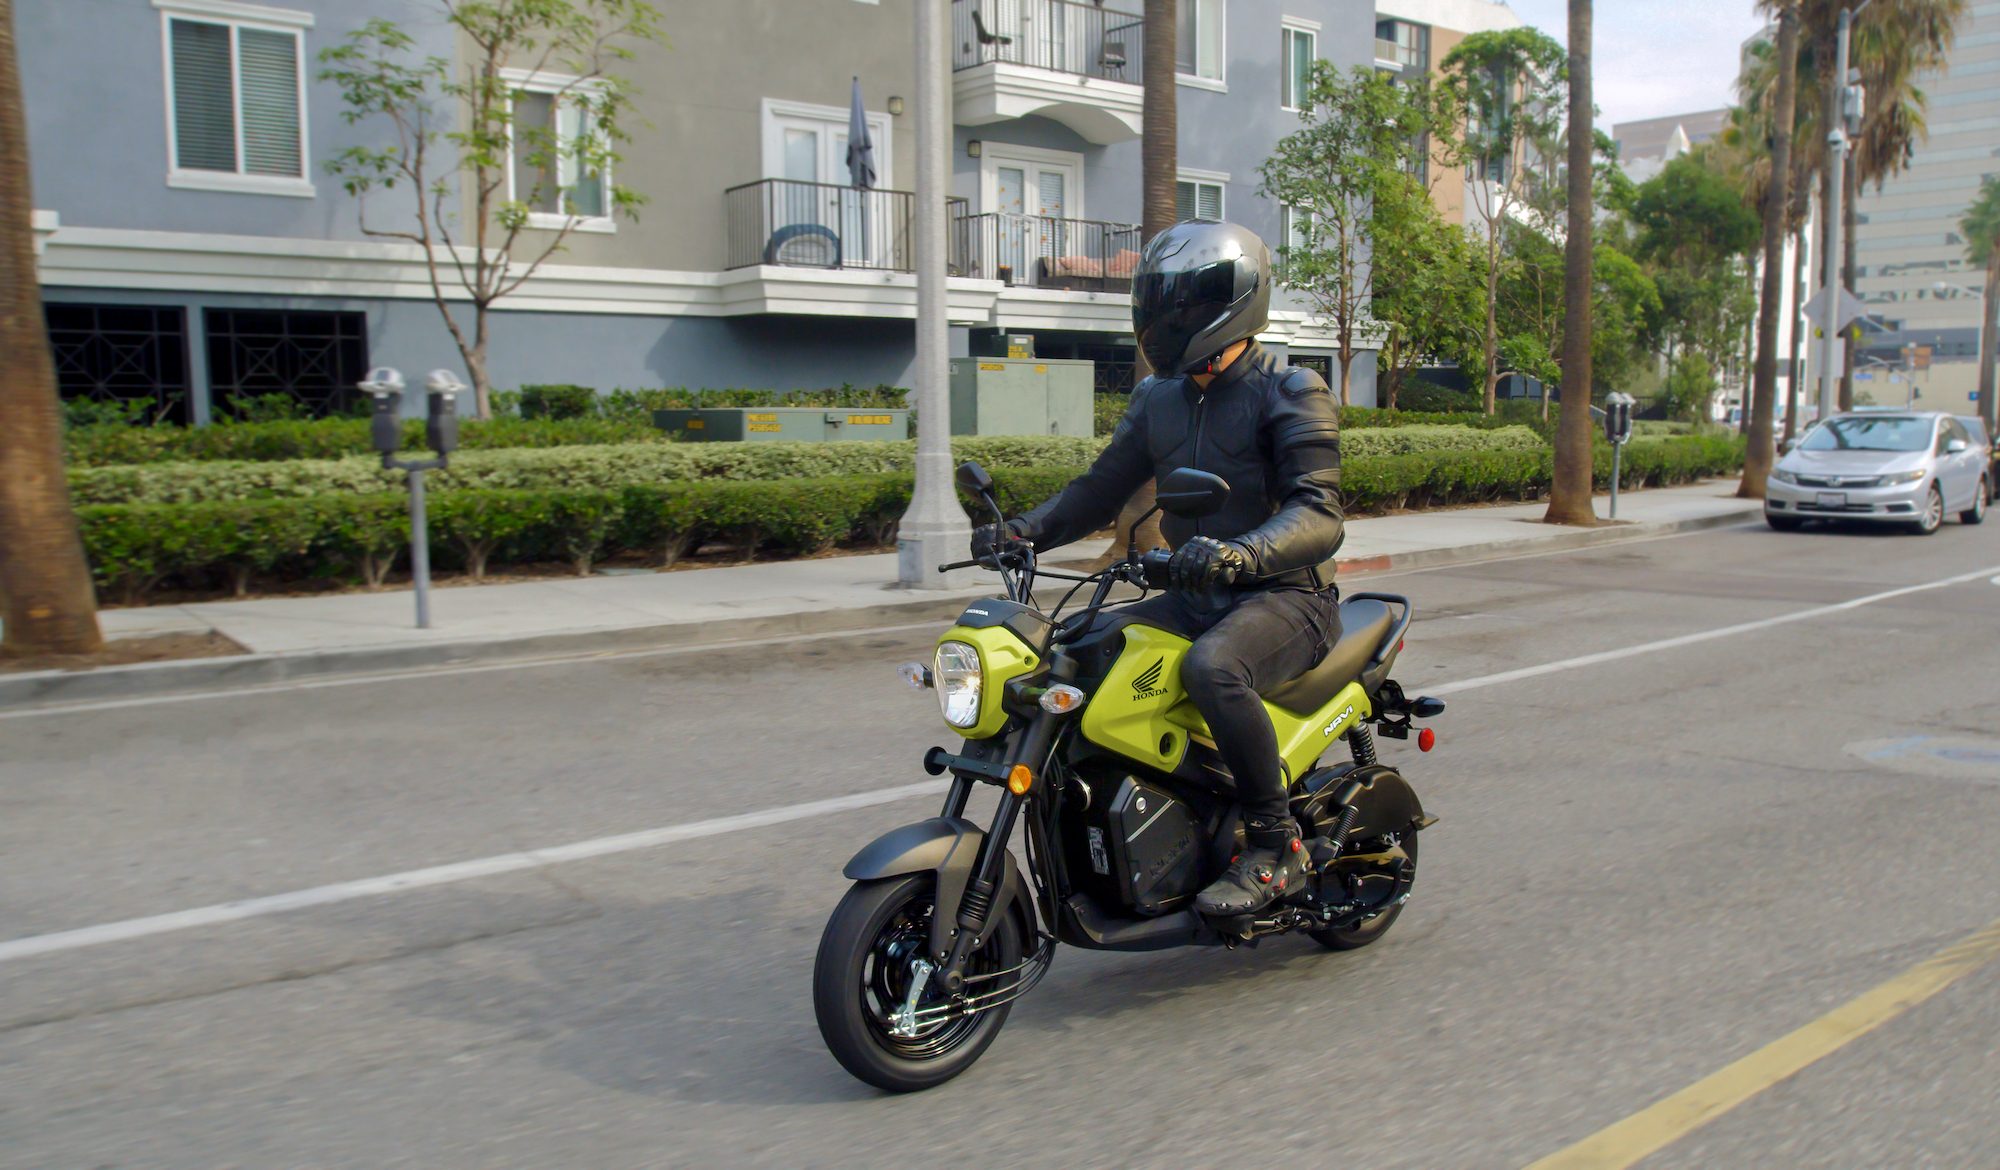 A rider rides a 2022 Honda Navi through a city street